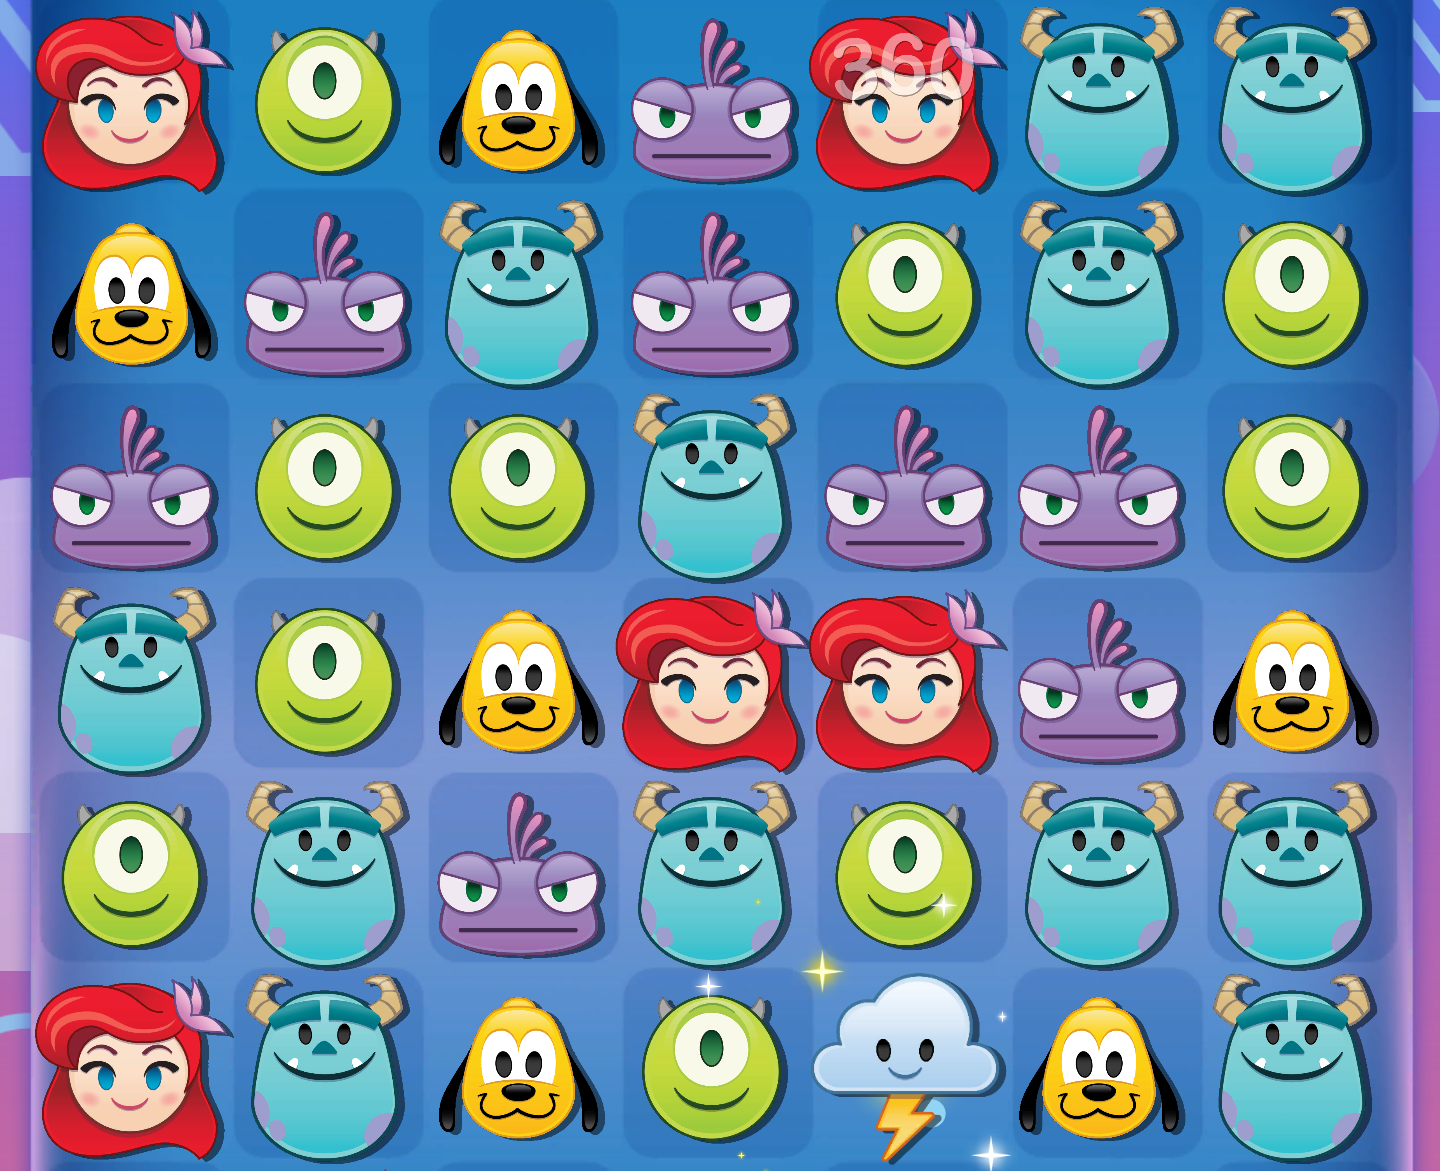 App Review: Disney Emoji Blitz is Adorably Fun